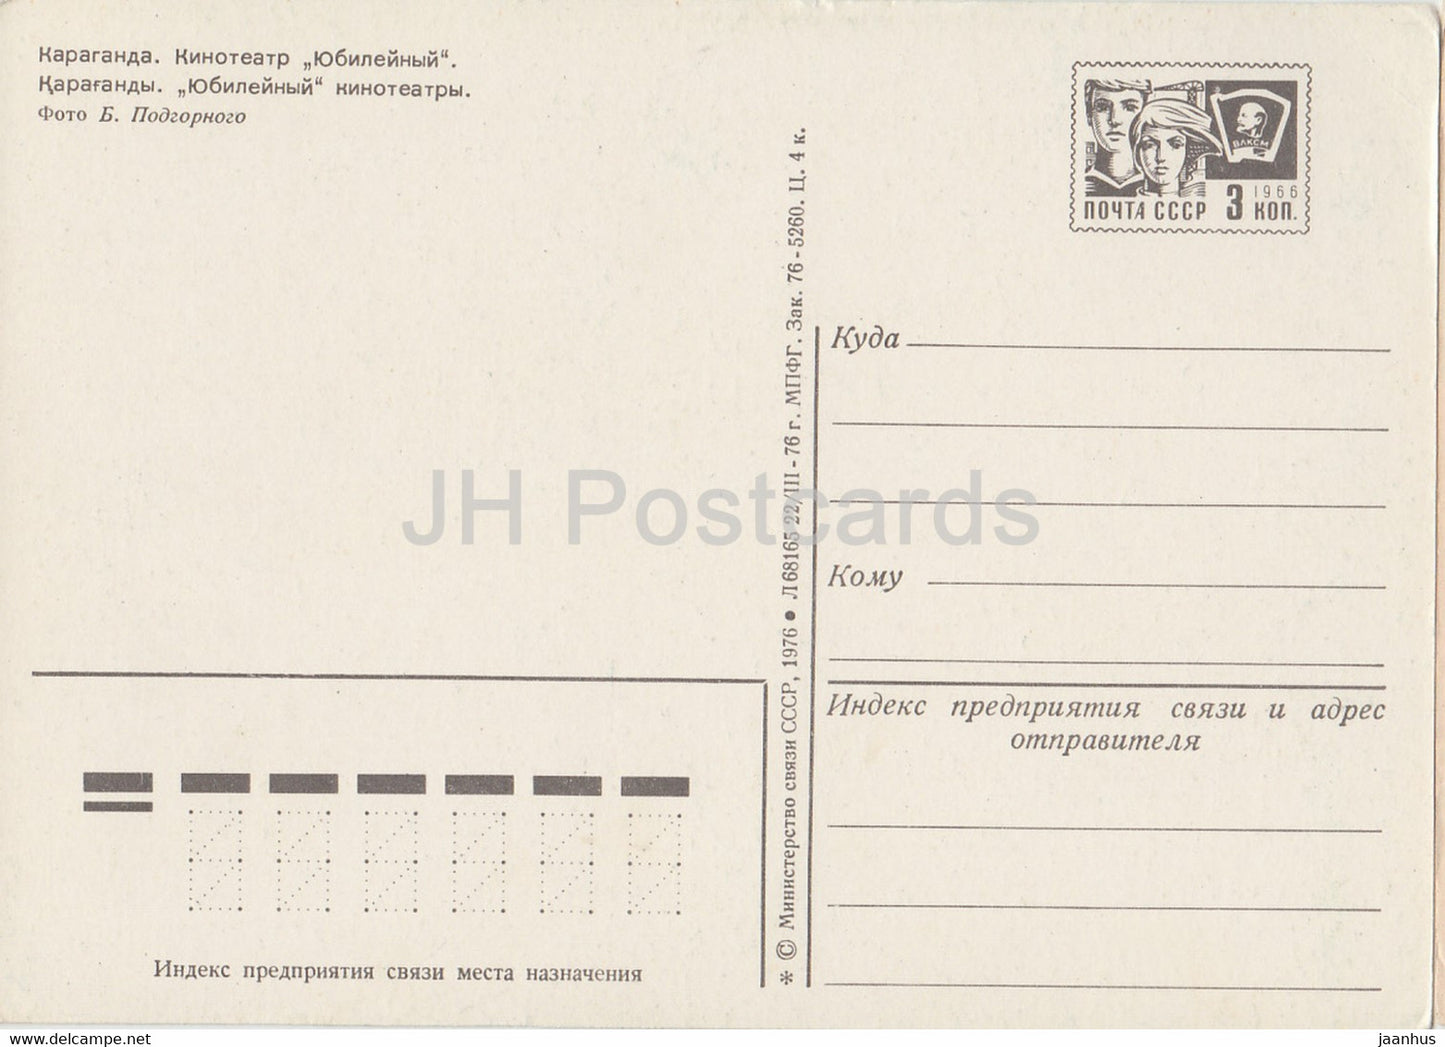 Karaganda - Karagandy - cinema theatre Yubileinyi - postal stationery - 1976 - Kazakhstan USSR - unused